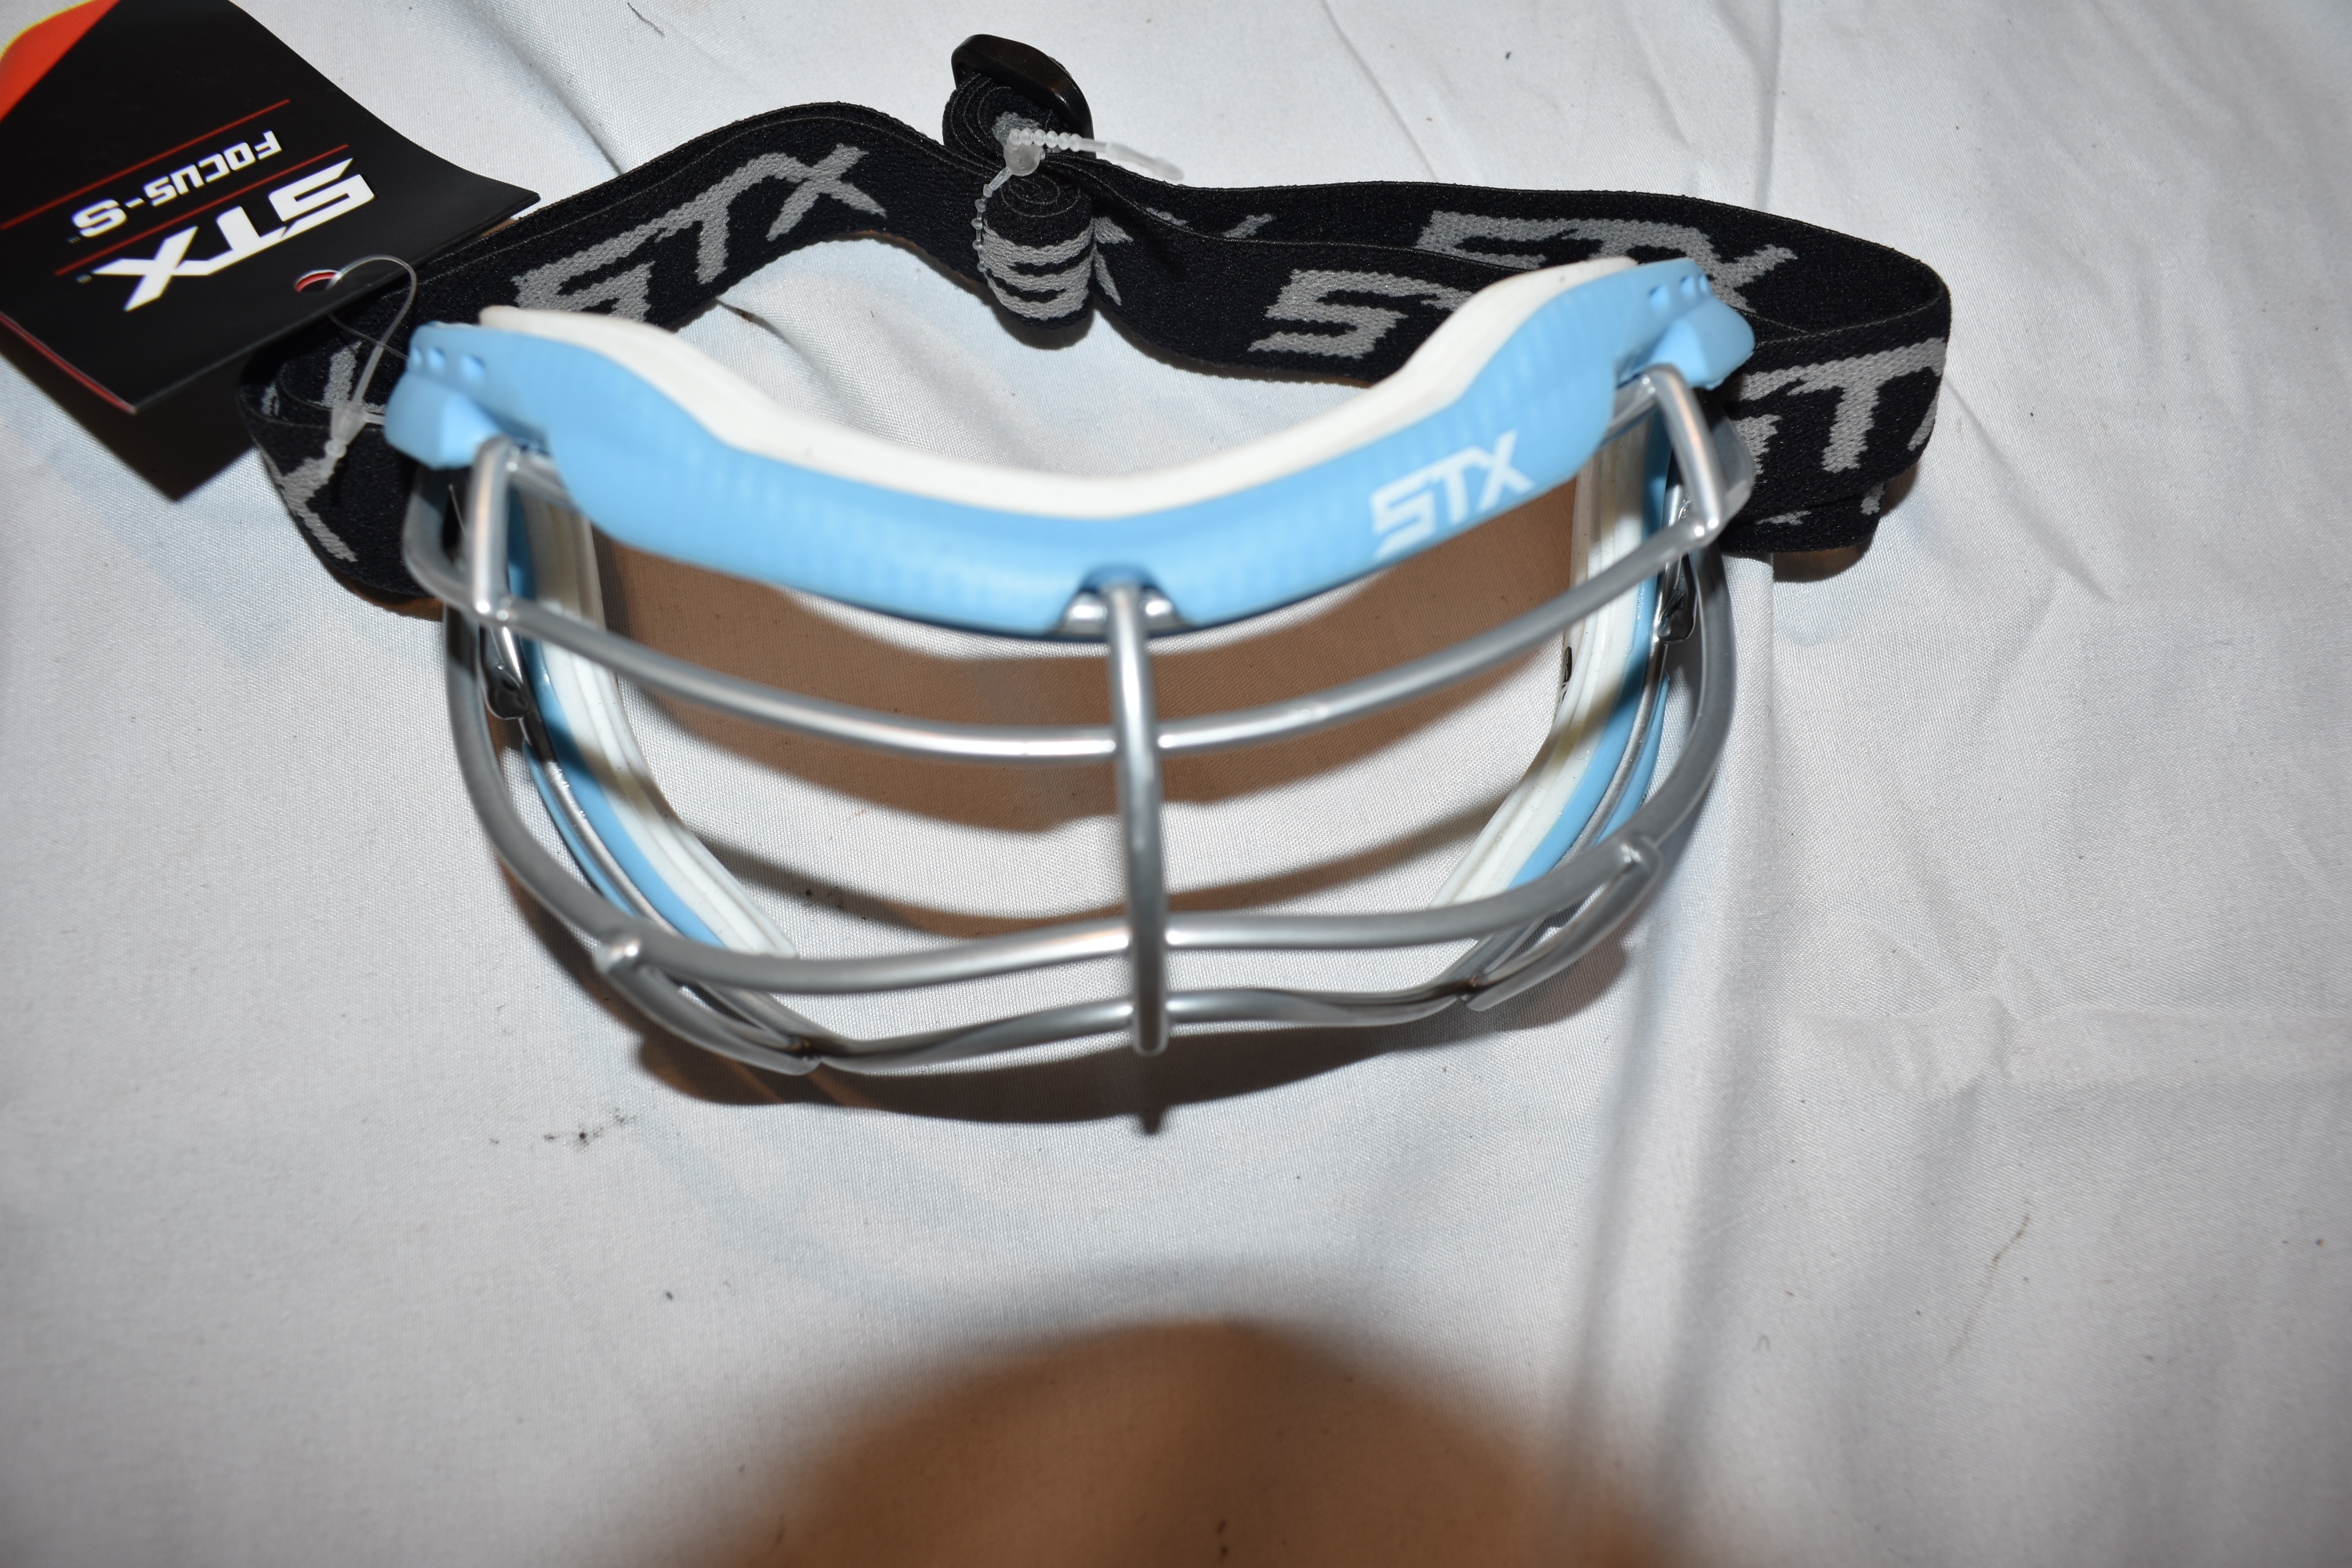 NEW - STX Focus-S Adult Lacrosse / Field Hockey Goggles, Blue